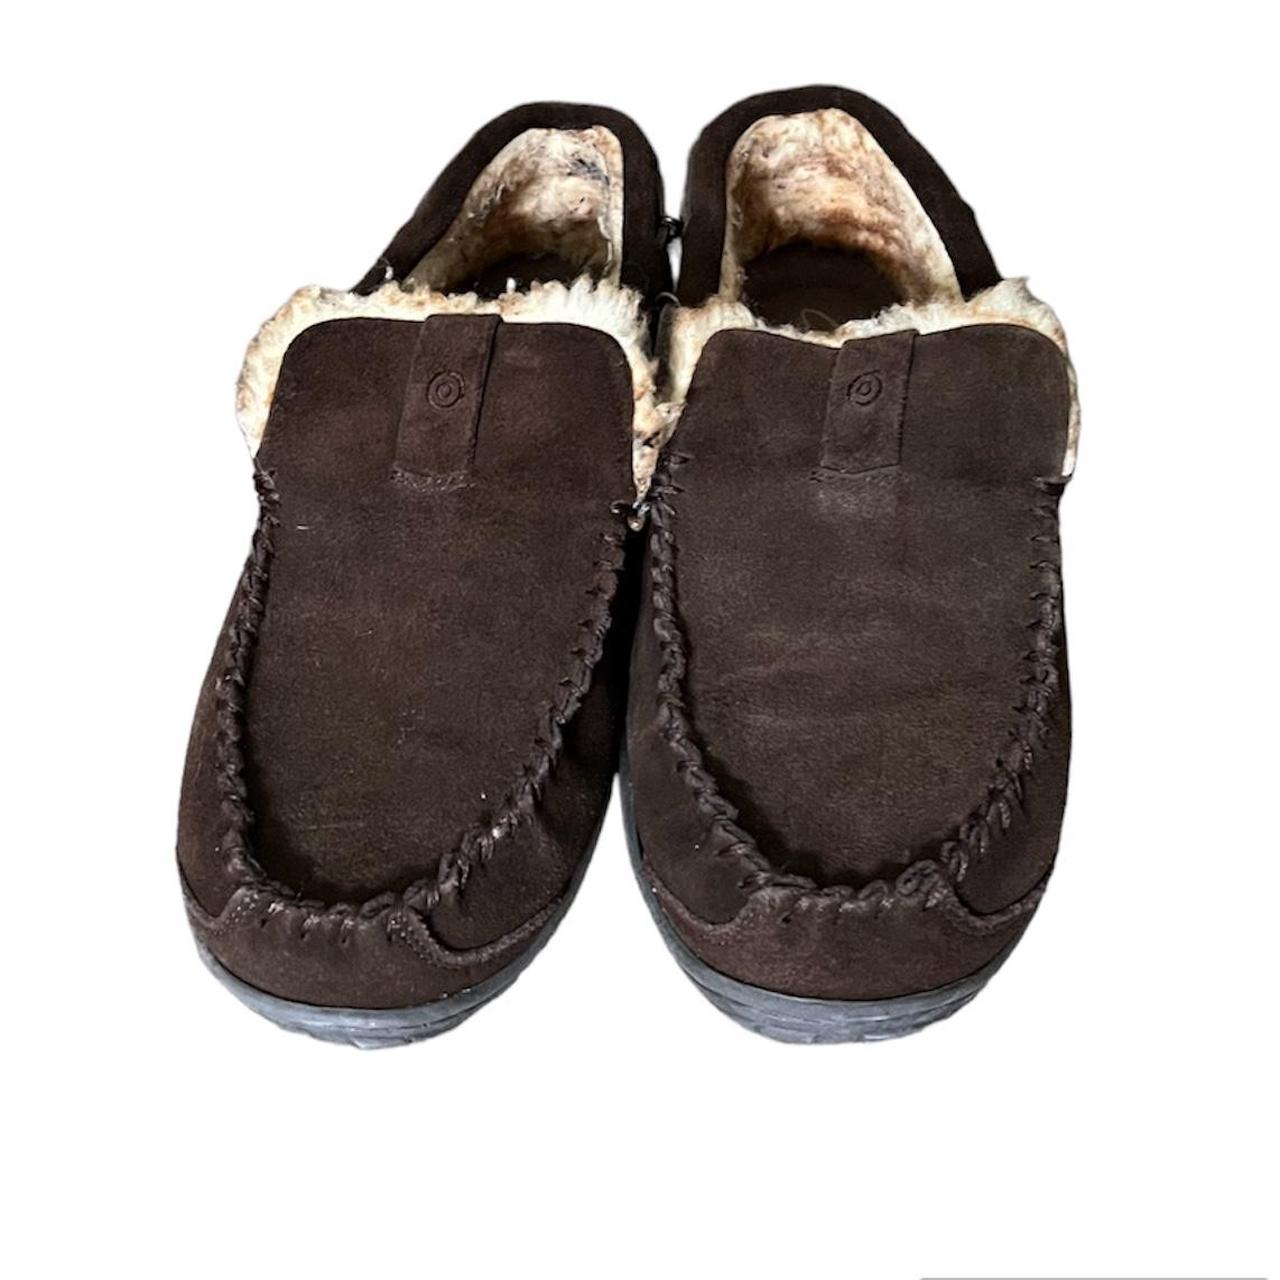 Clarks Warren Leather Moccasin Clog Slippers Comfort... - Depop